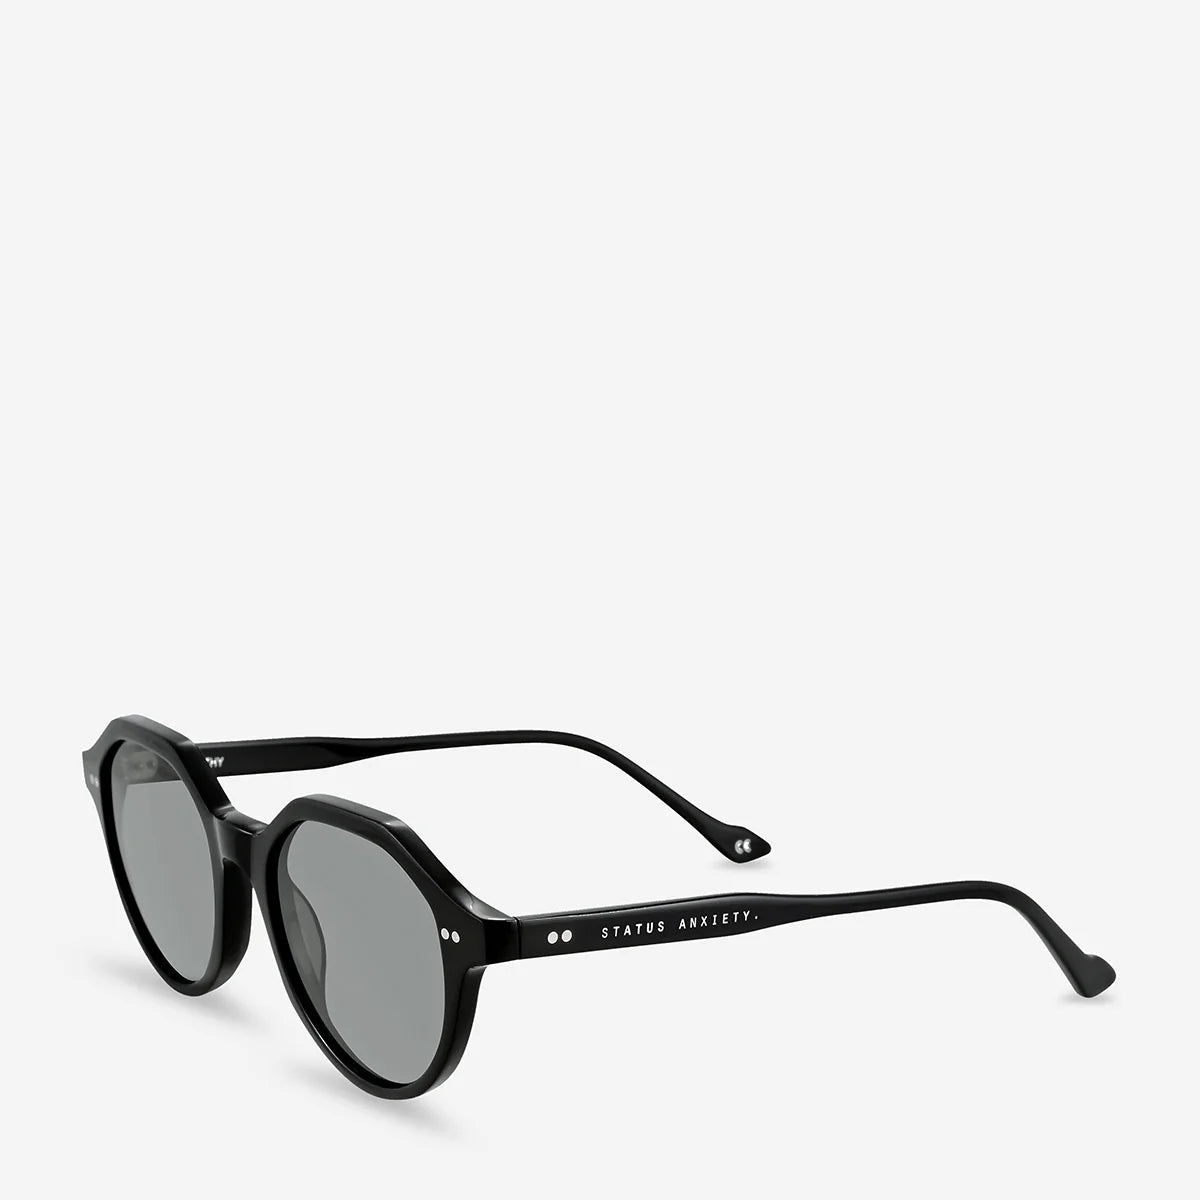 Apathy Sunglasses - Black